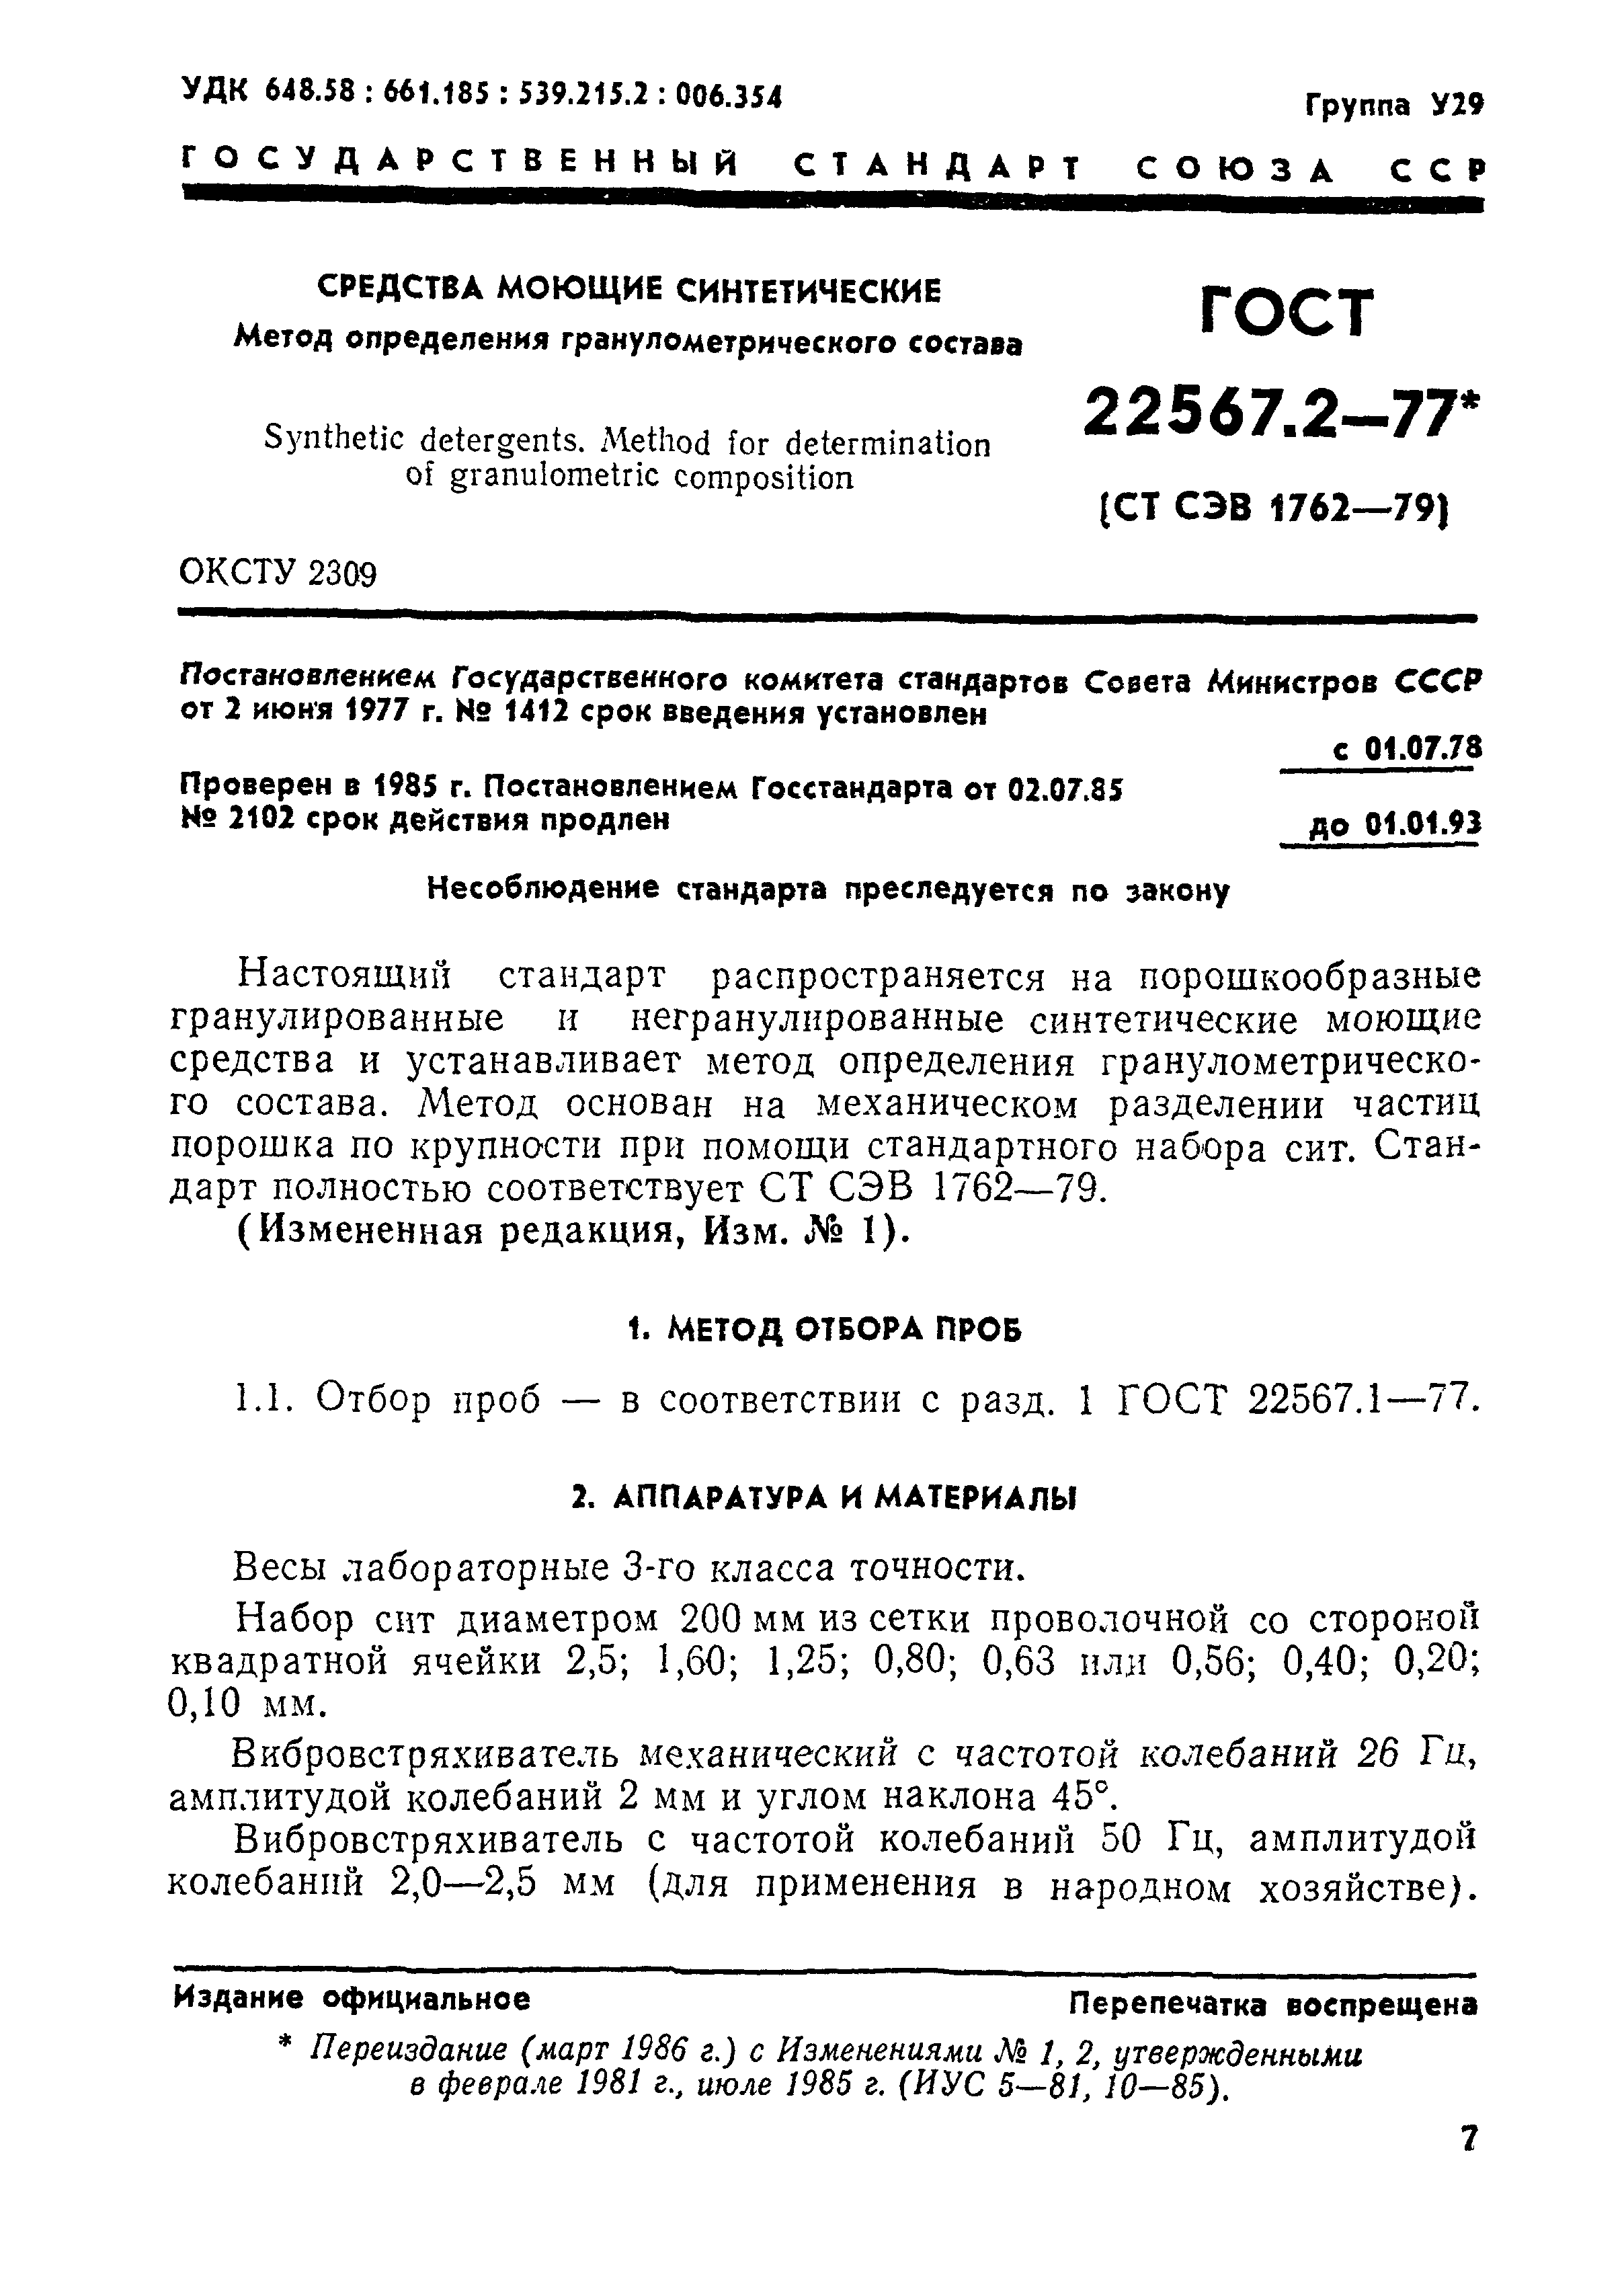 ГОСТ 22567.2-77